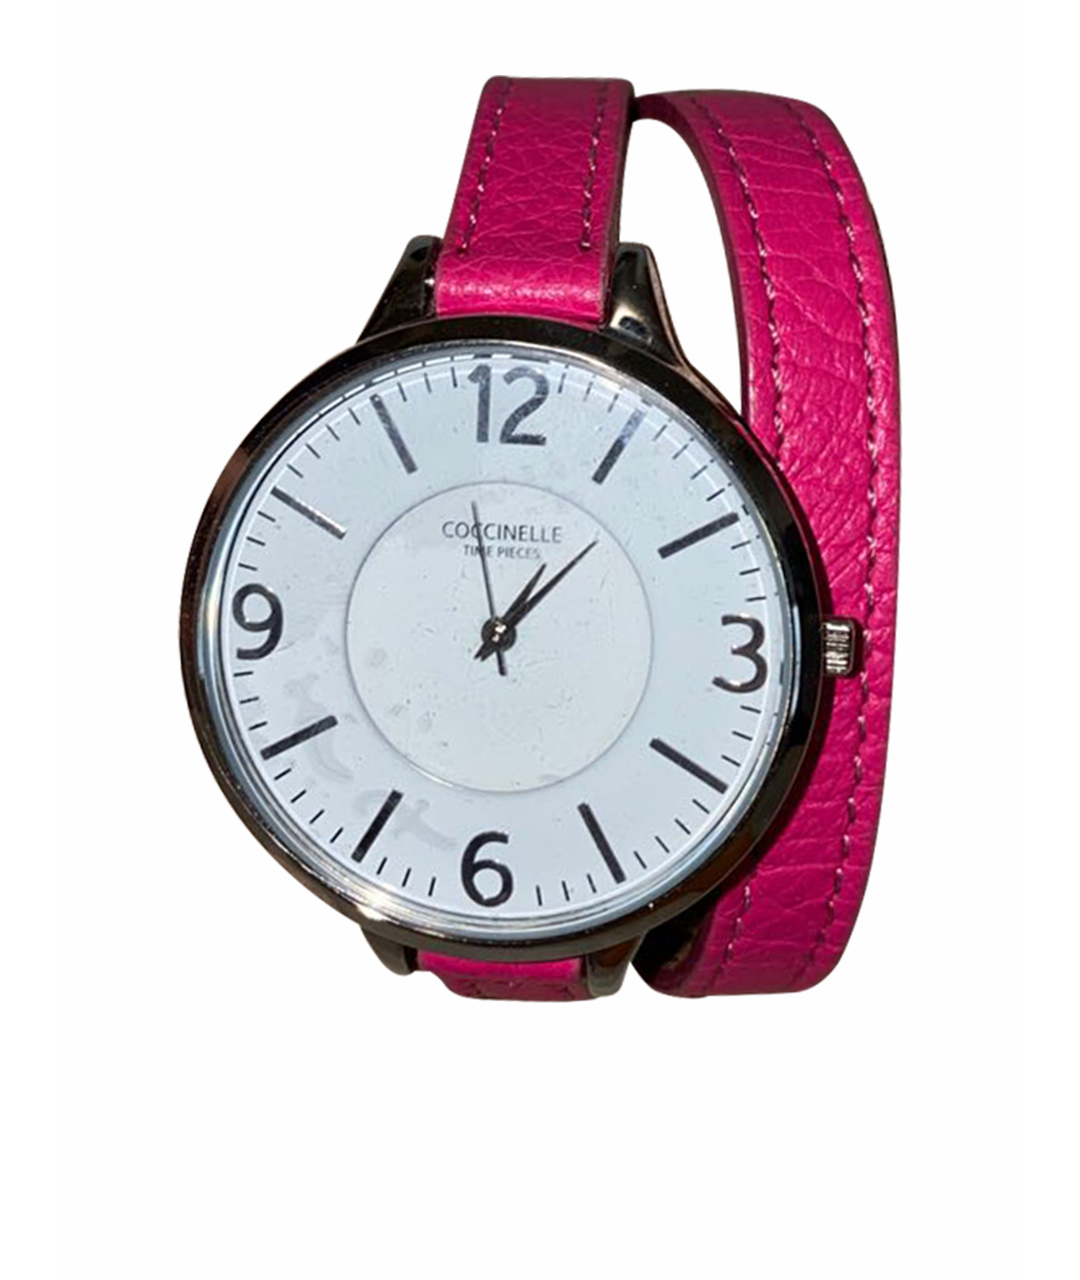 COCCINELLE Розовые кожаные часы, фото 1